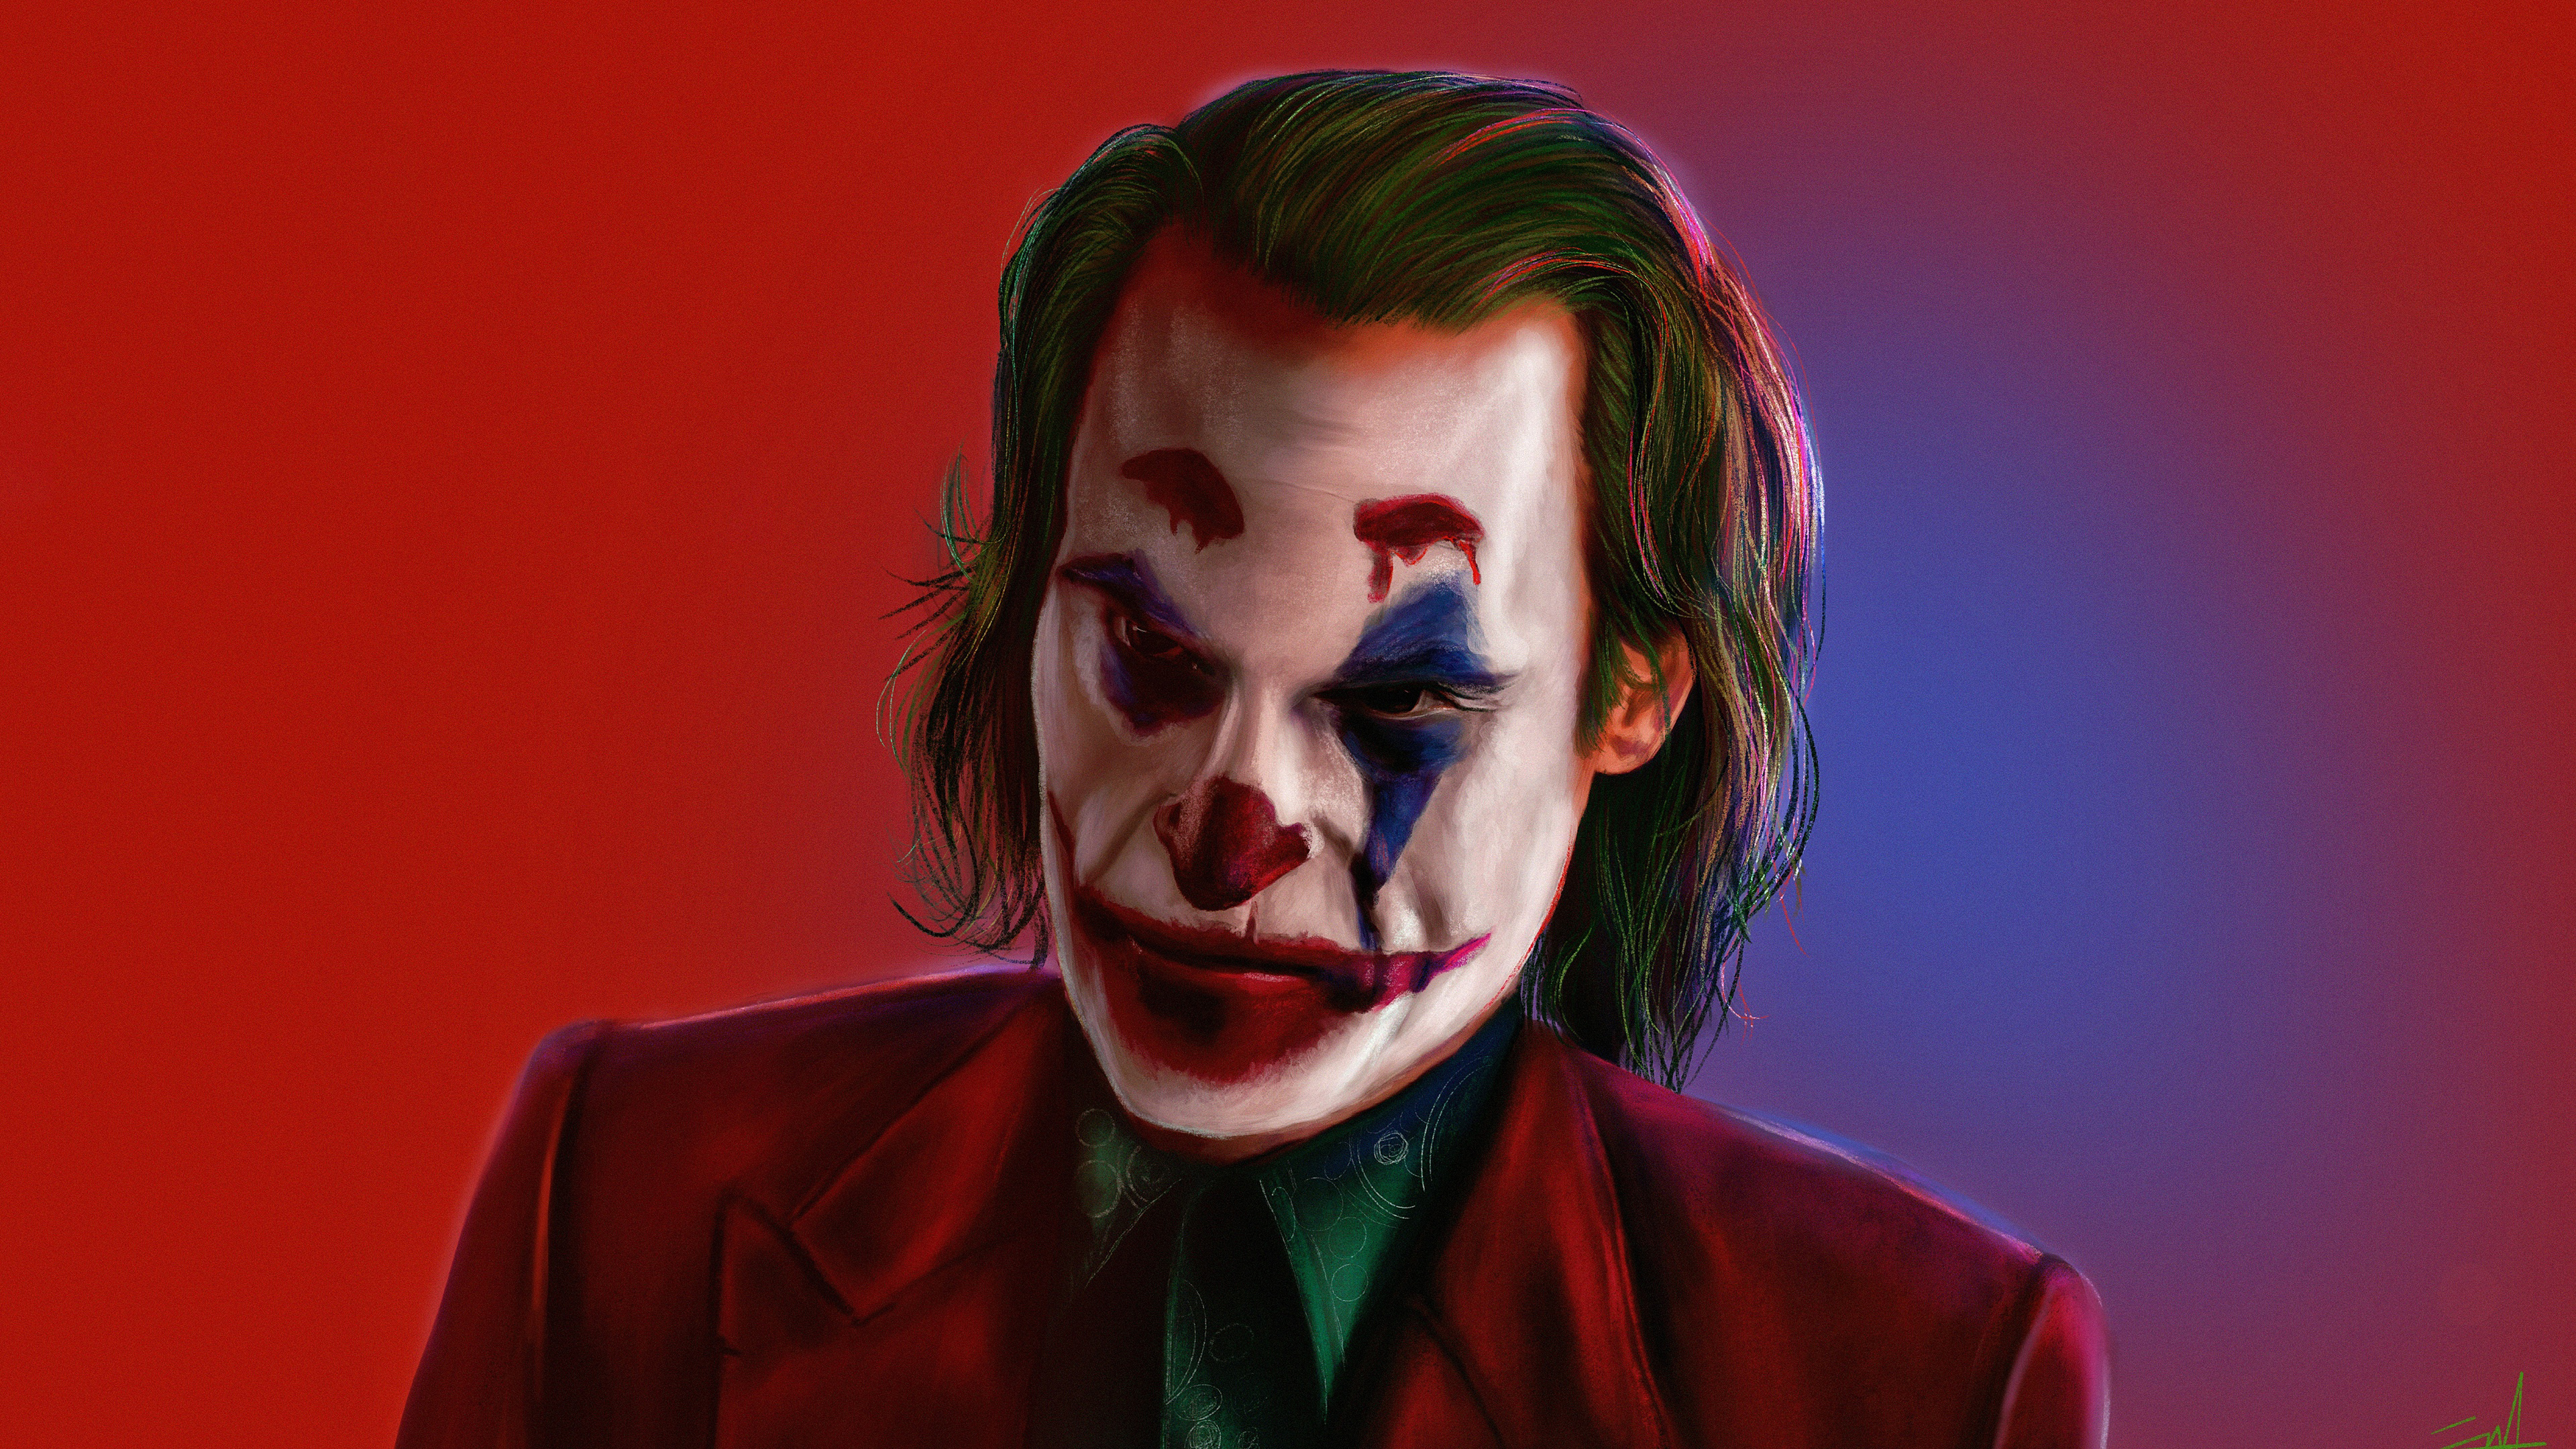 Joker Joaquin Phoenix With Red And Blue Background 4K HD Joker Wallpaper